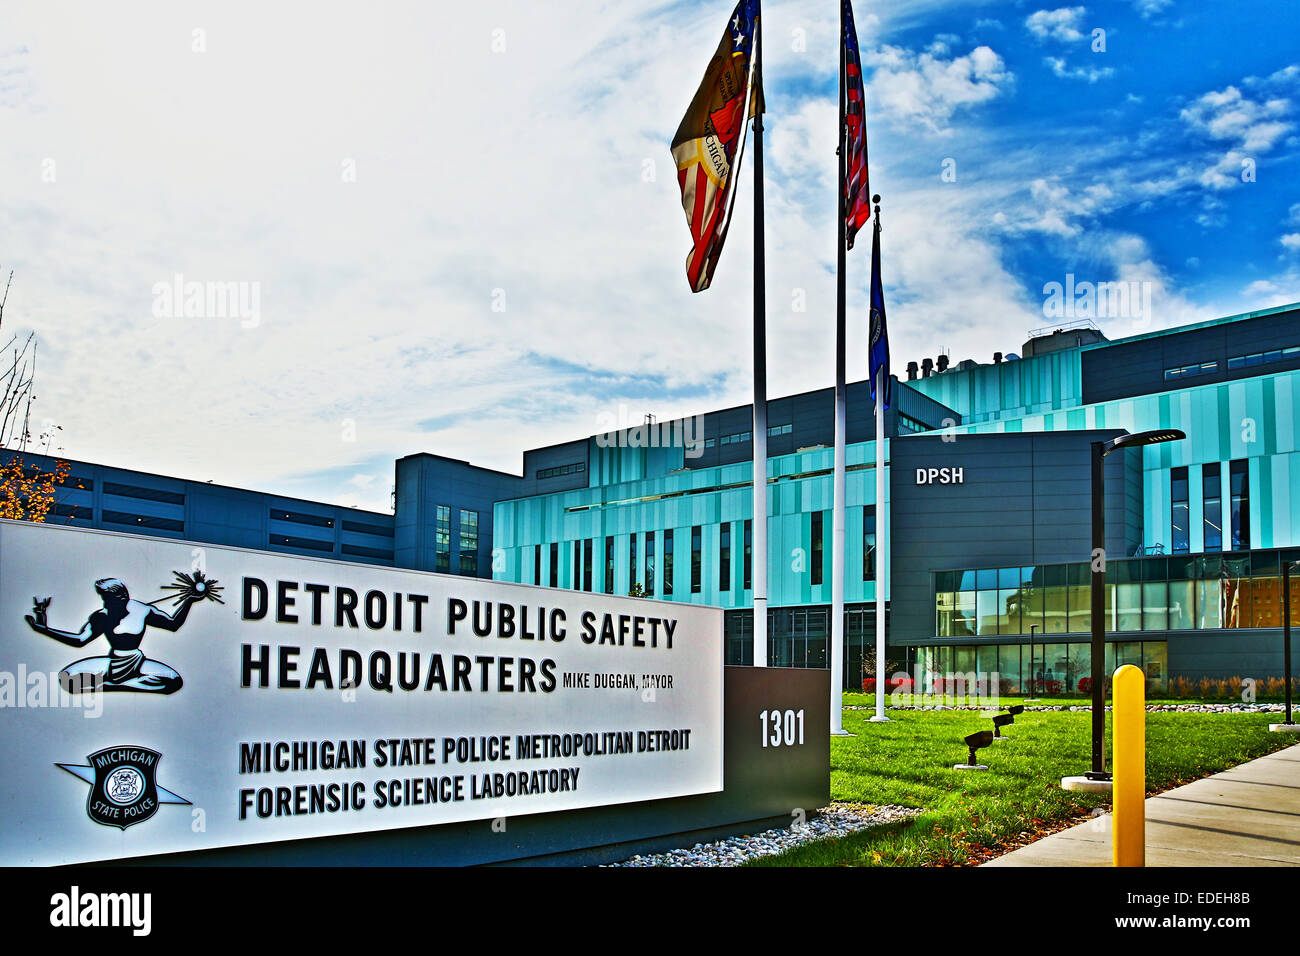 Detroit Pubblica Sicurezza sede, Michigan, Stati Uniti d'America. 24 ottobre, 2014. Foto Stock